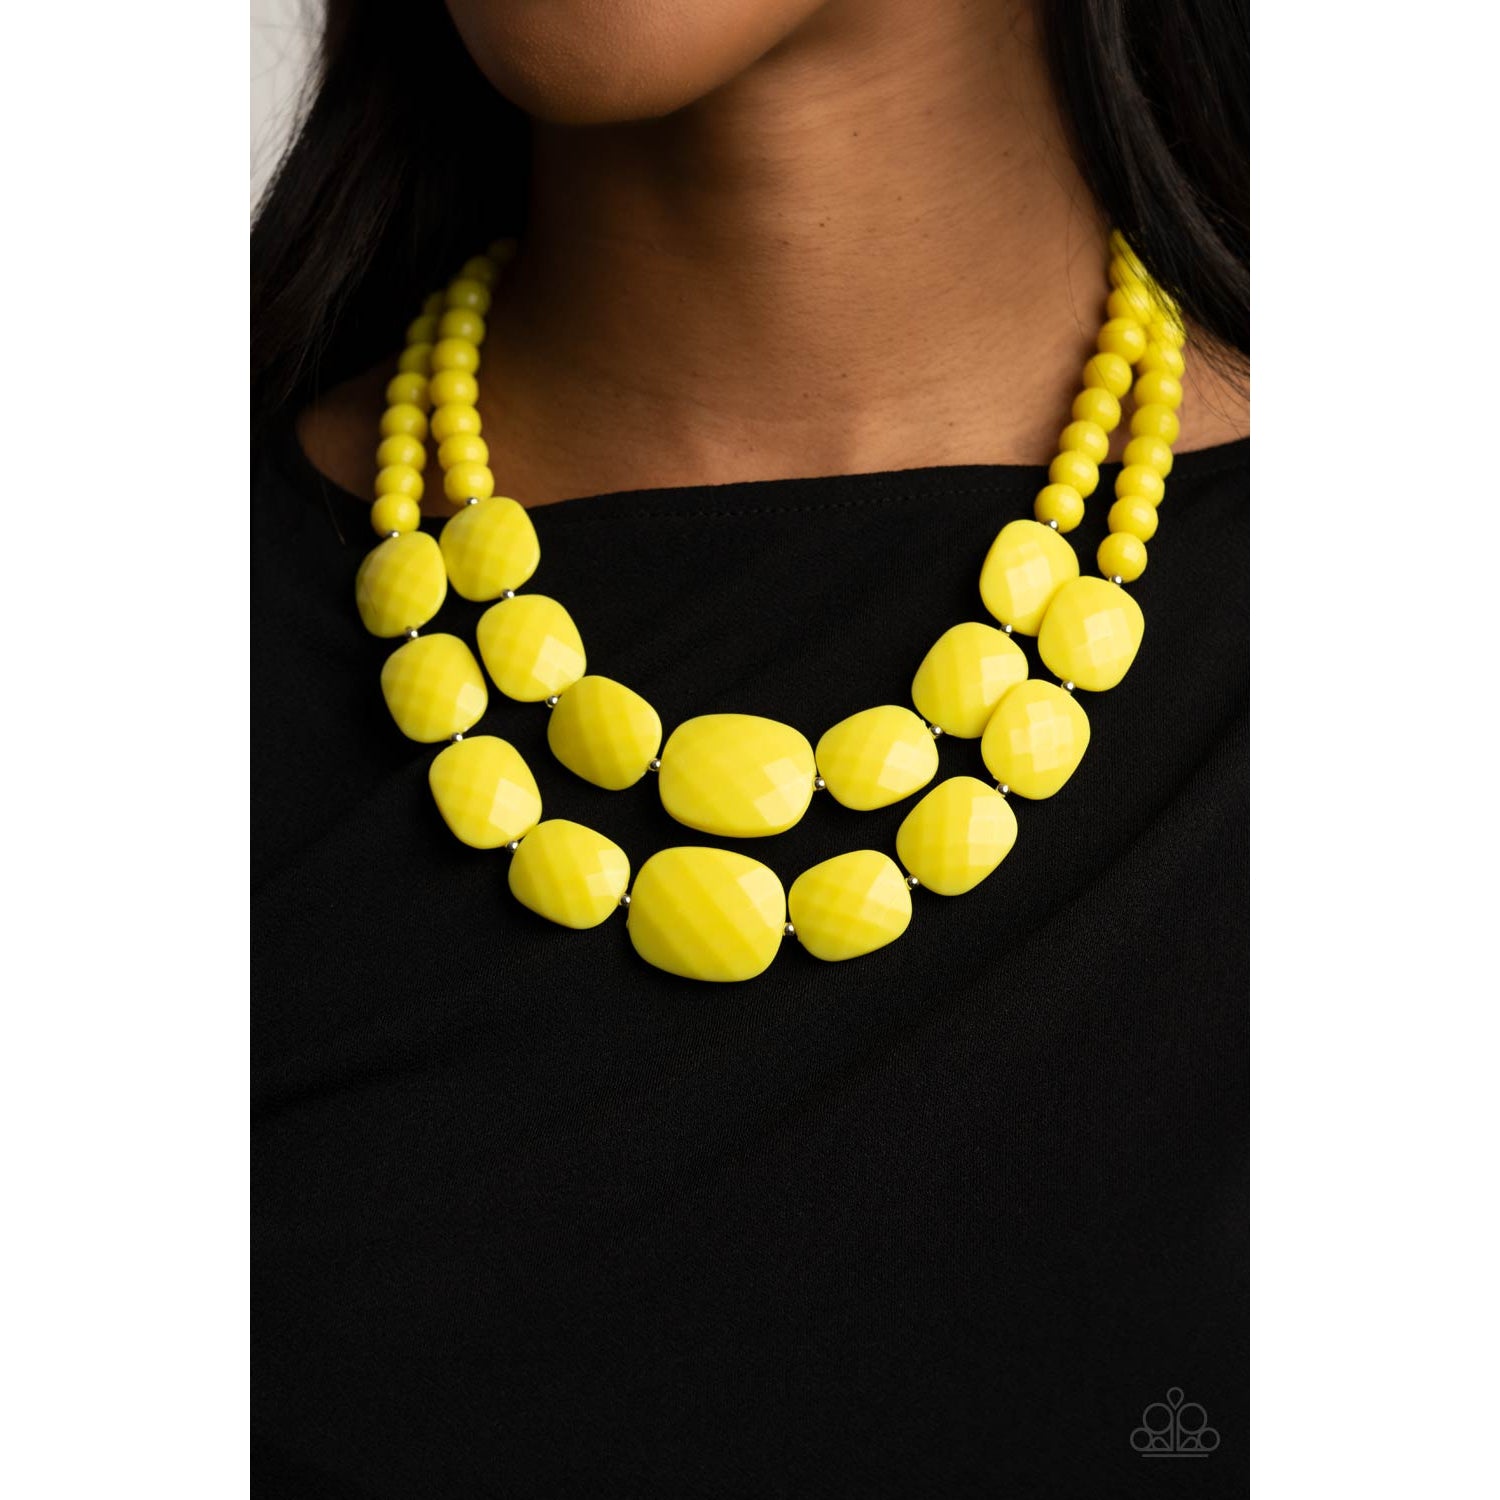 Resort Ready - Yellow Necklace - Paparazzi Accessories - GlaMarous Titi Jewels